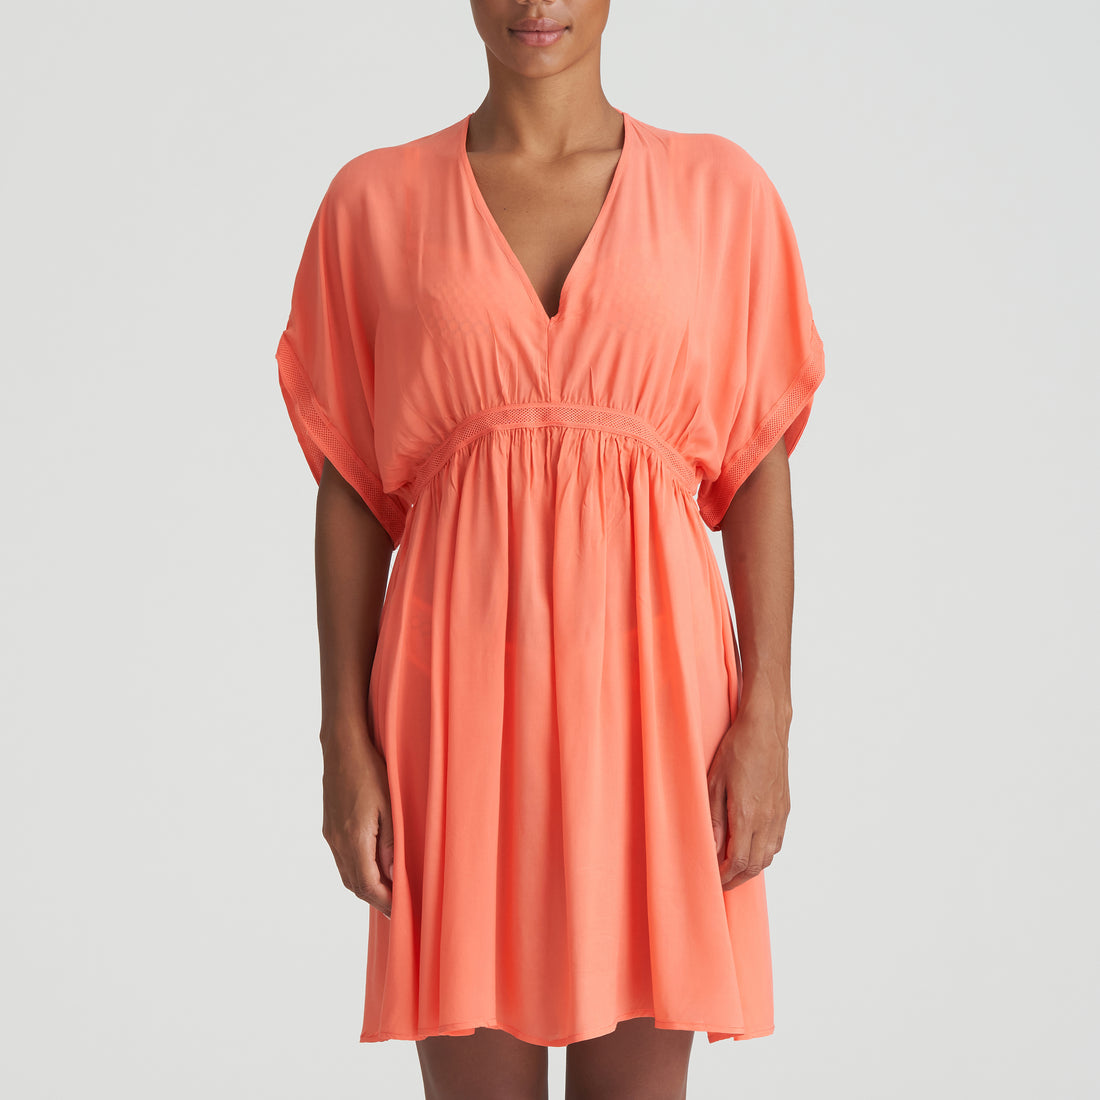 Marie Jo Swim Almoshi Swimwear Dress Short (1007180) Juicy Peach